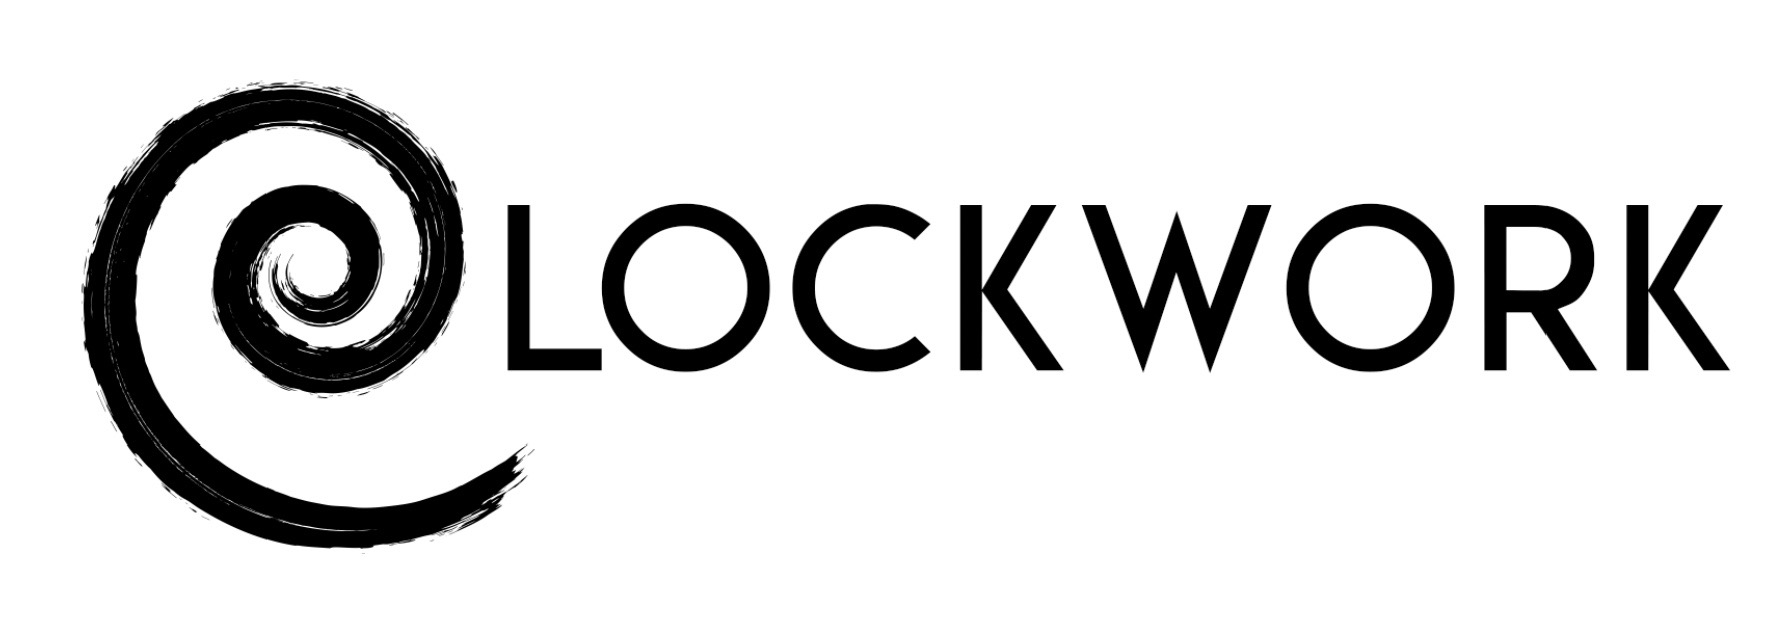 ClockworkNew Logo